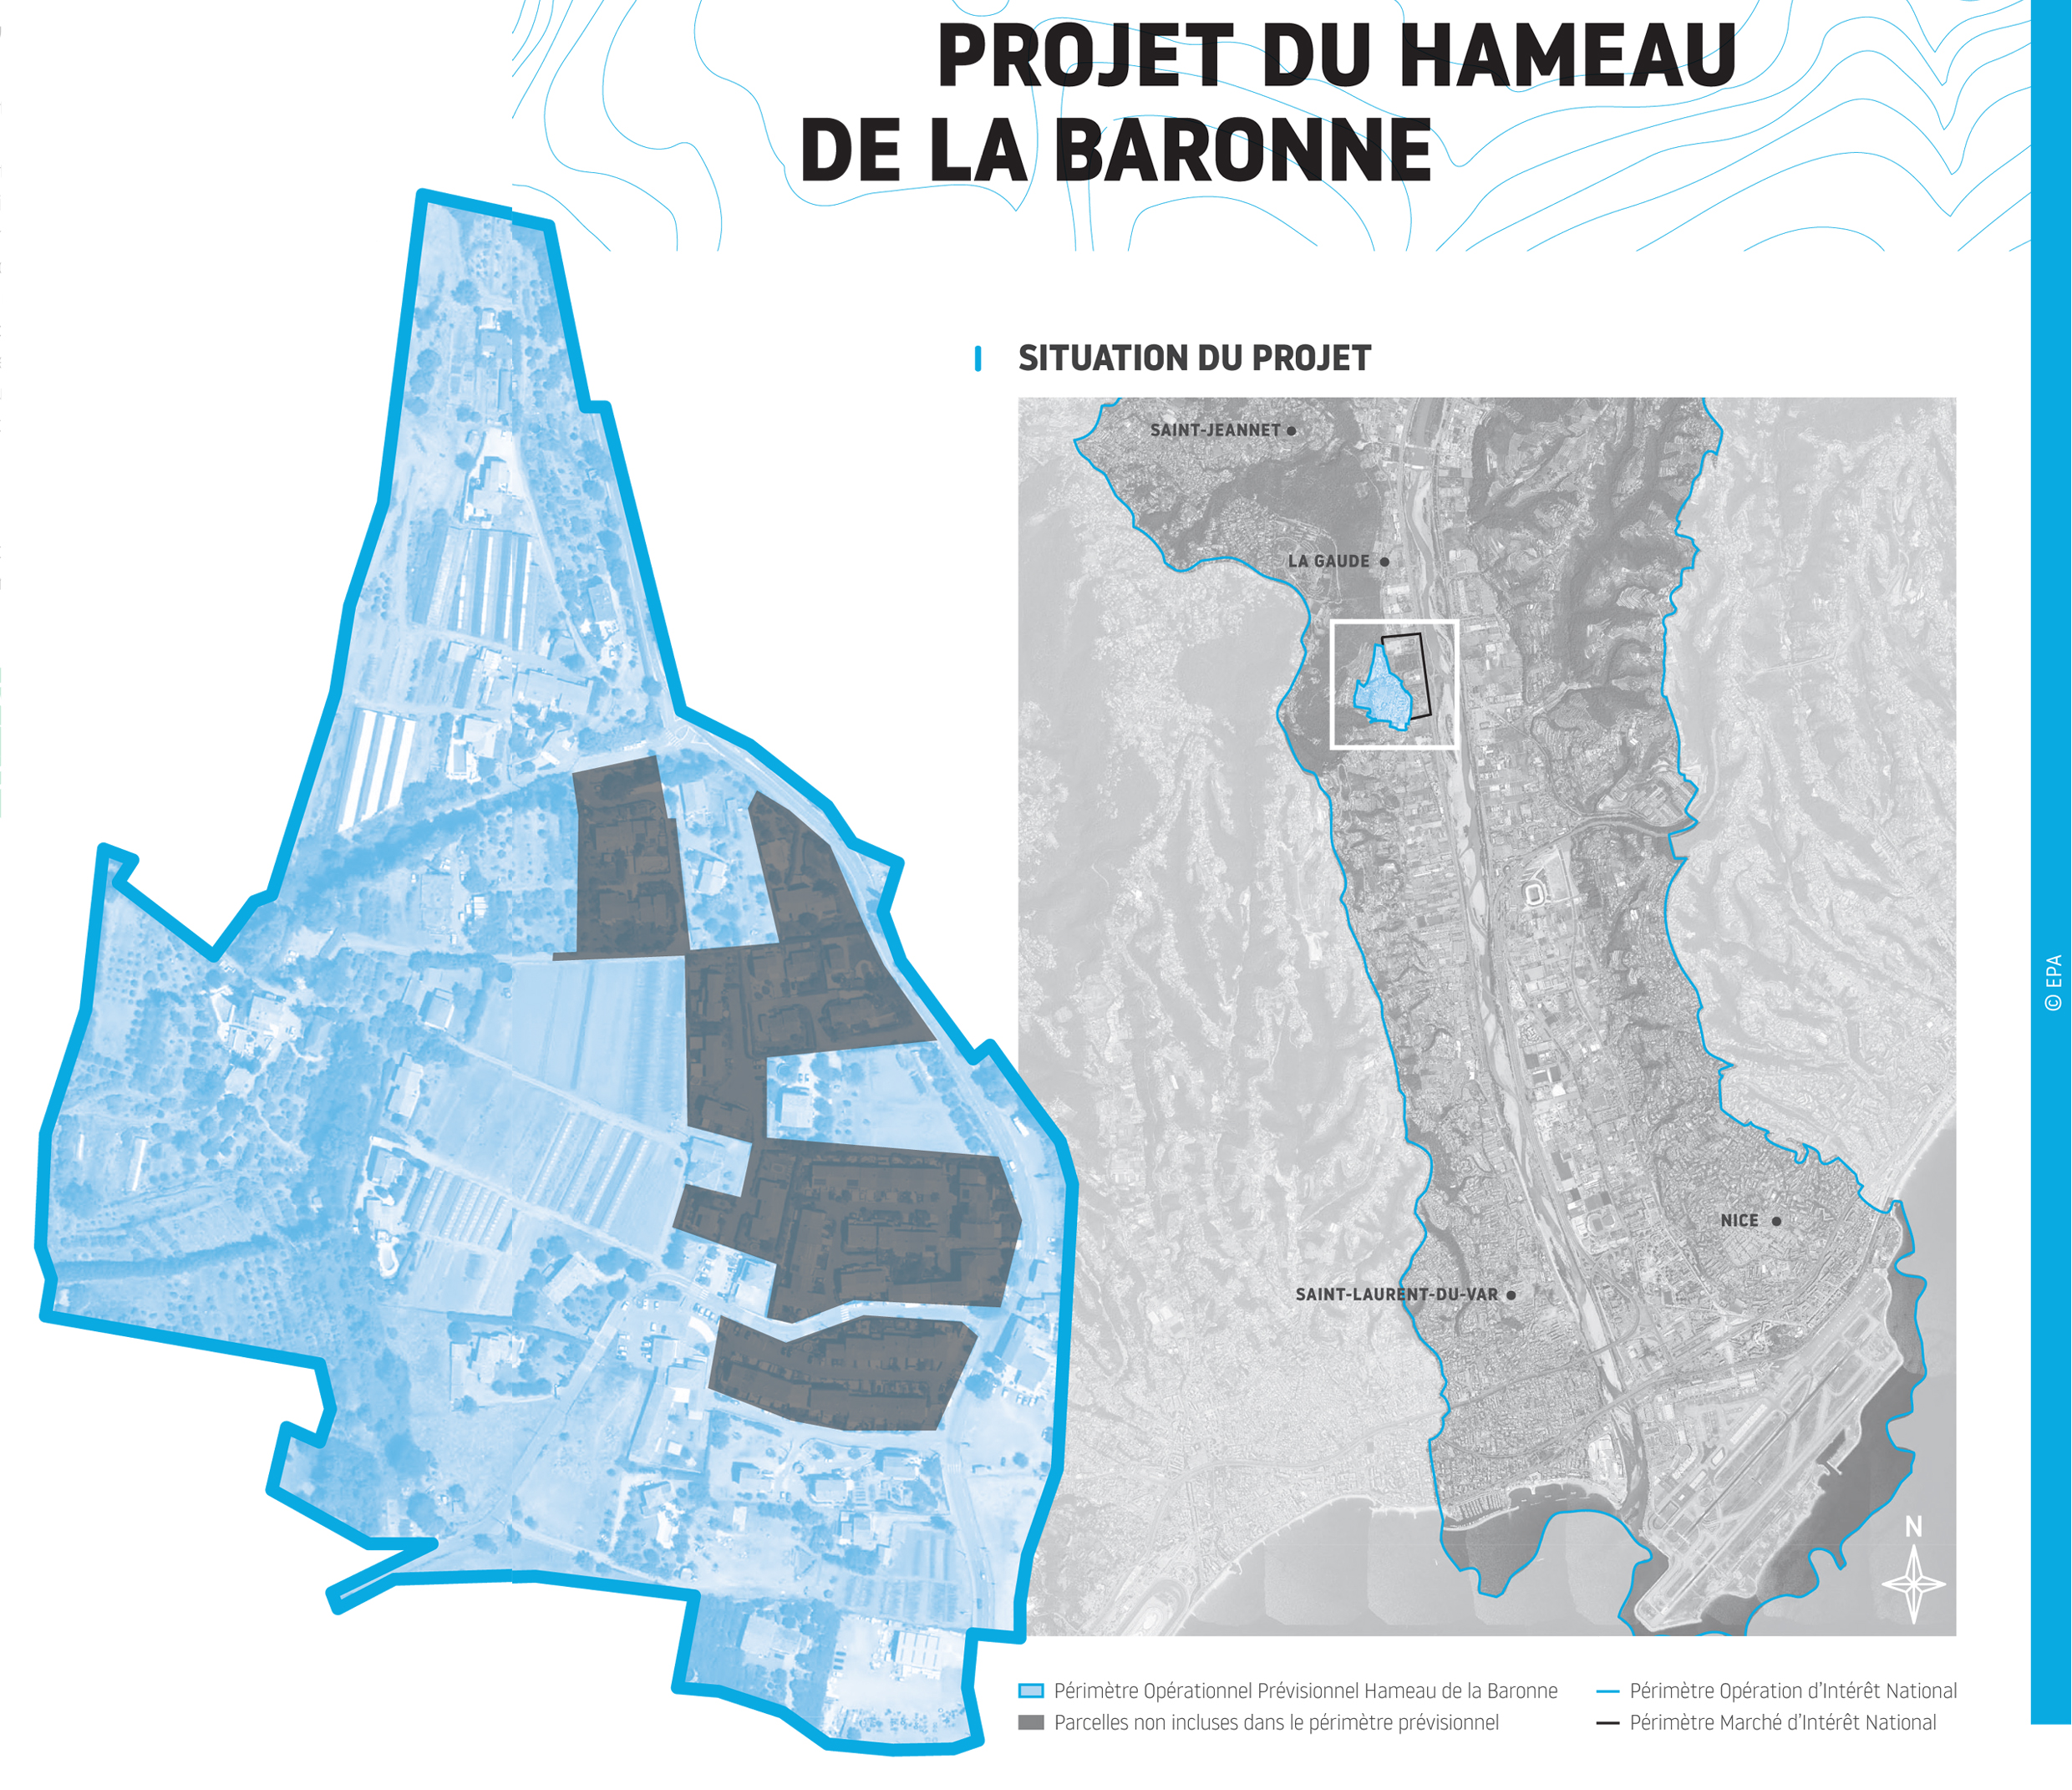 2019: Situation du Projet Hameau de La Baronne, La Gaude - NiceEcoVallée, AM 06